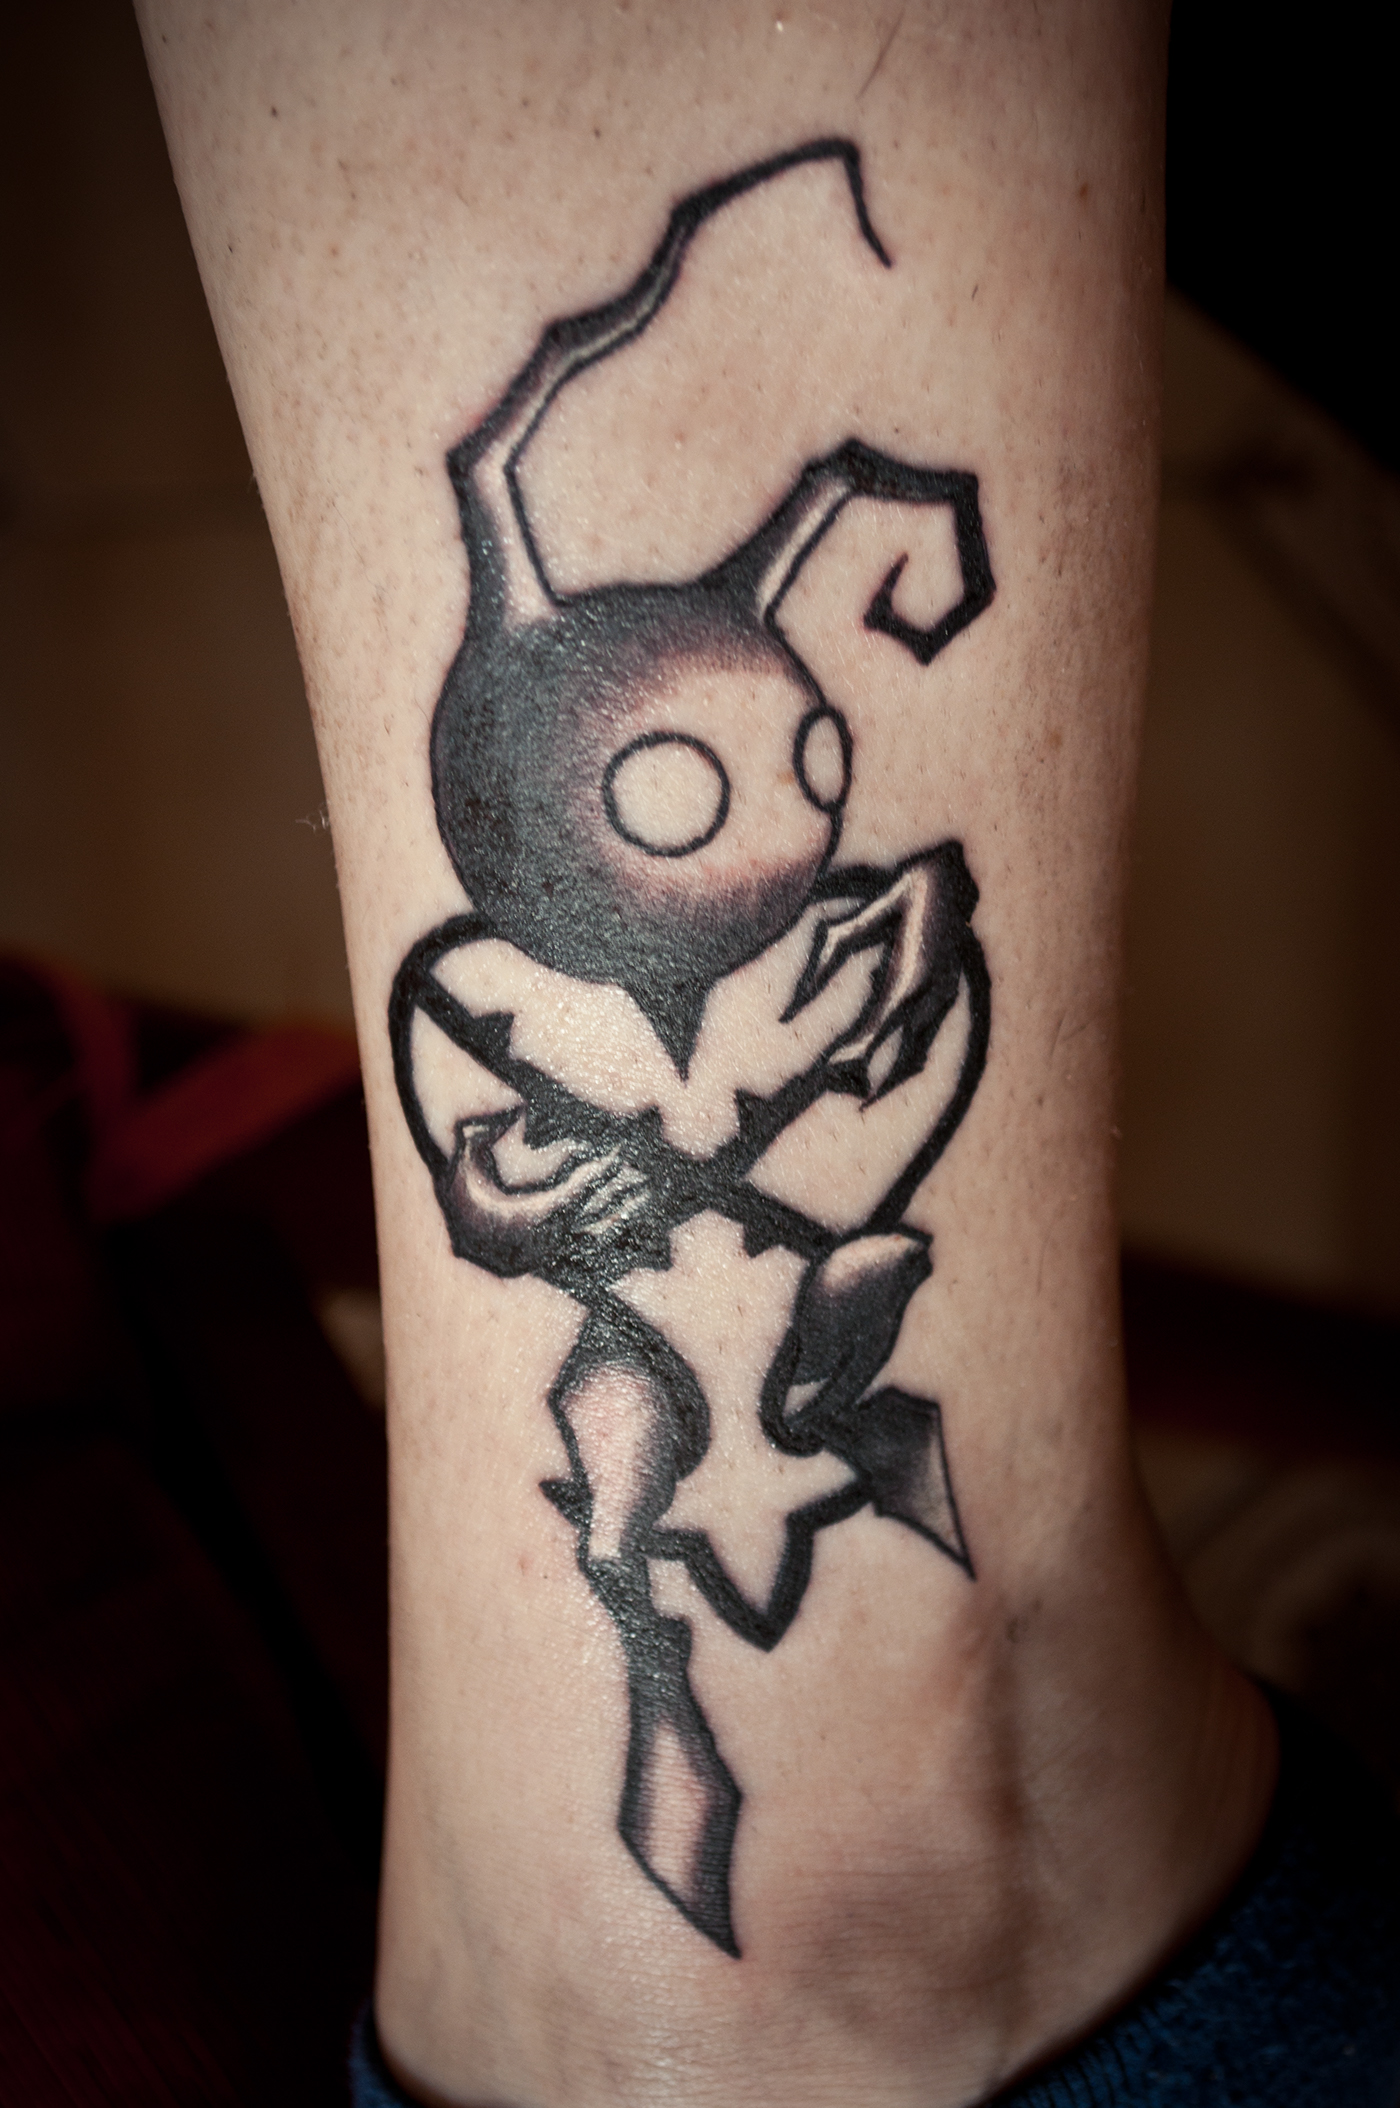 Kingdom Hearts Tattoo : Kingdom Hearts Tattoo by Gkenzo on DeviantArt